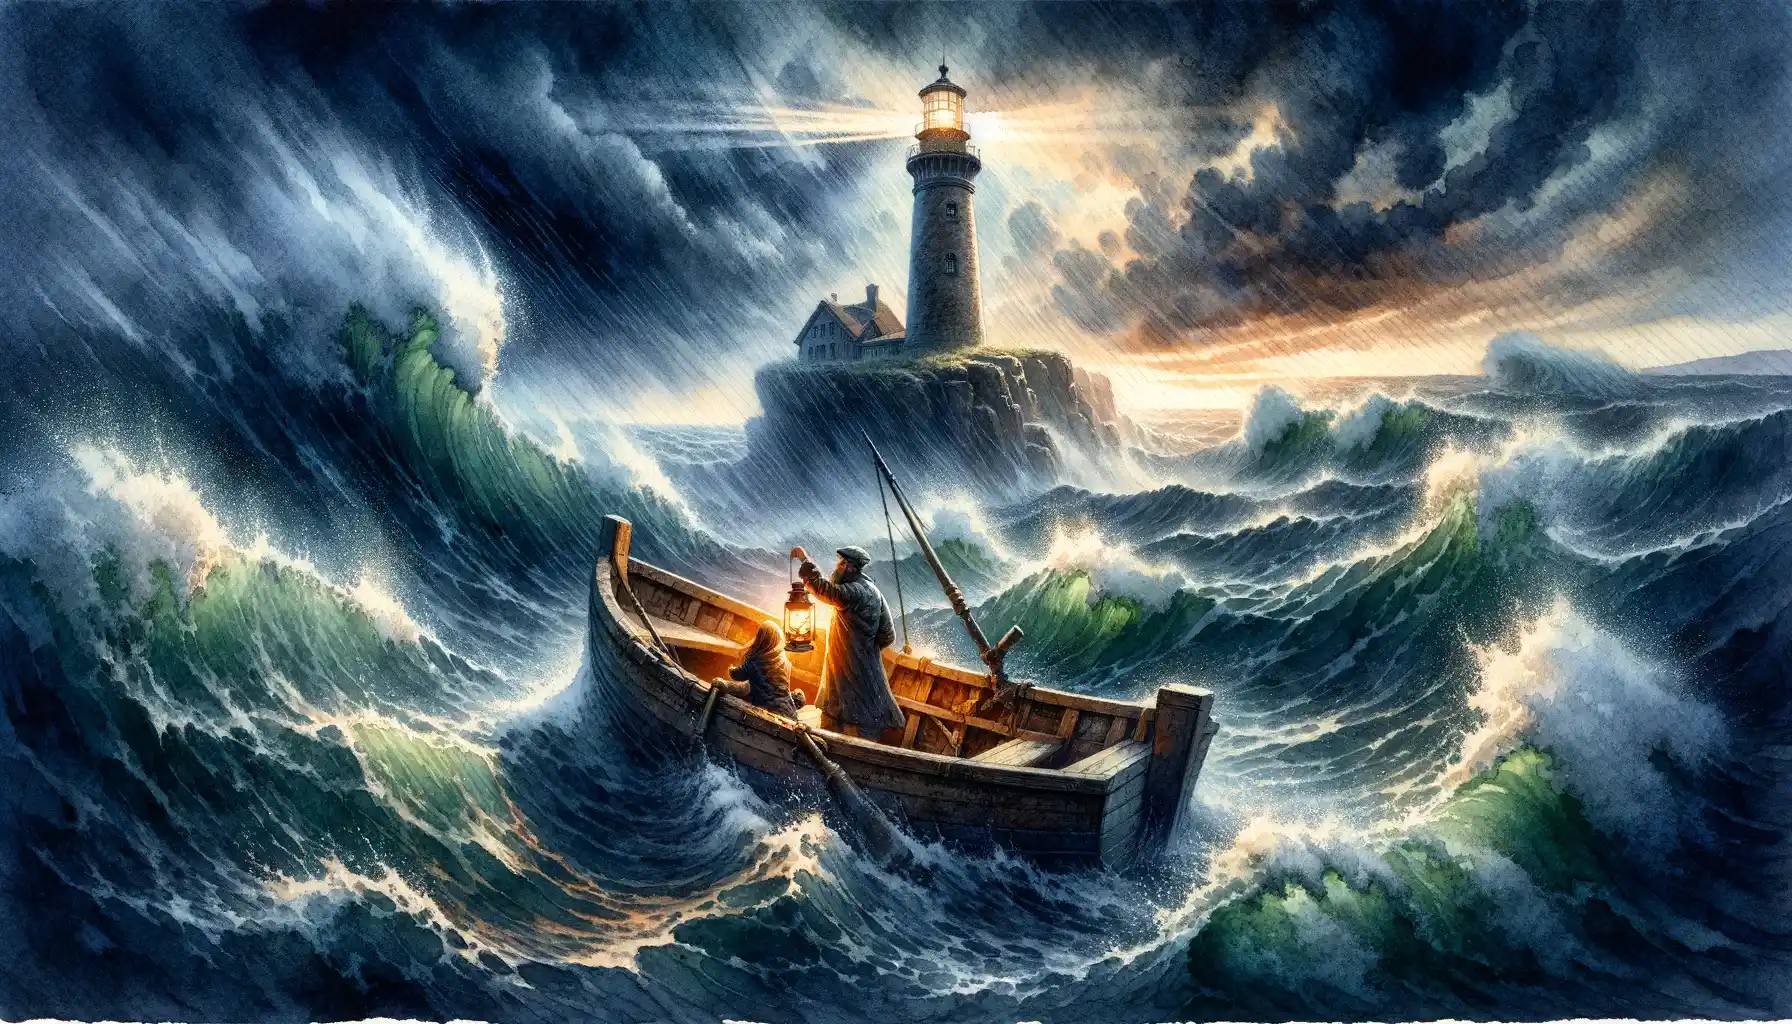 the lighthouse beacon guiding decisions through stormy seas